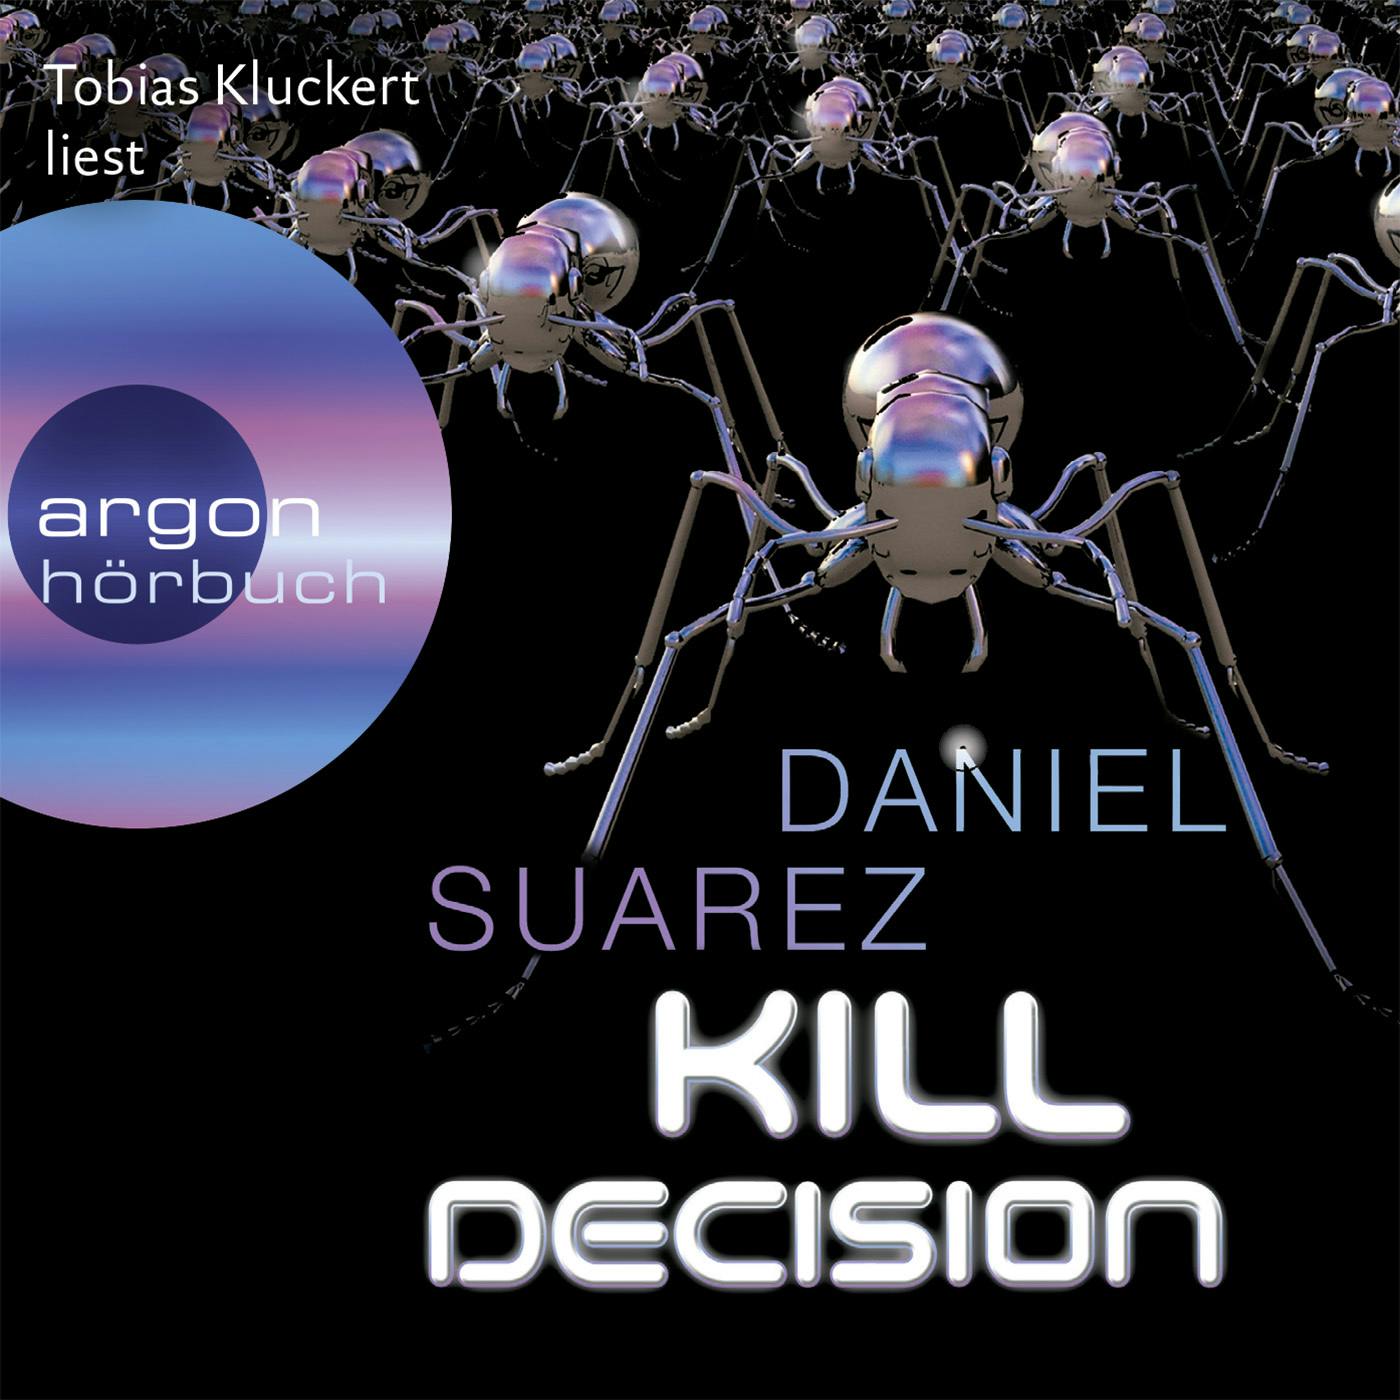 Kill Decision - Daniel Suarez